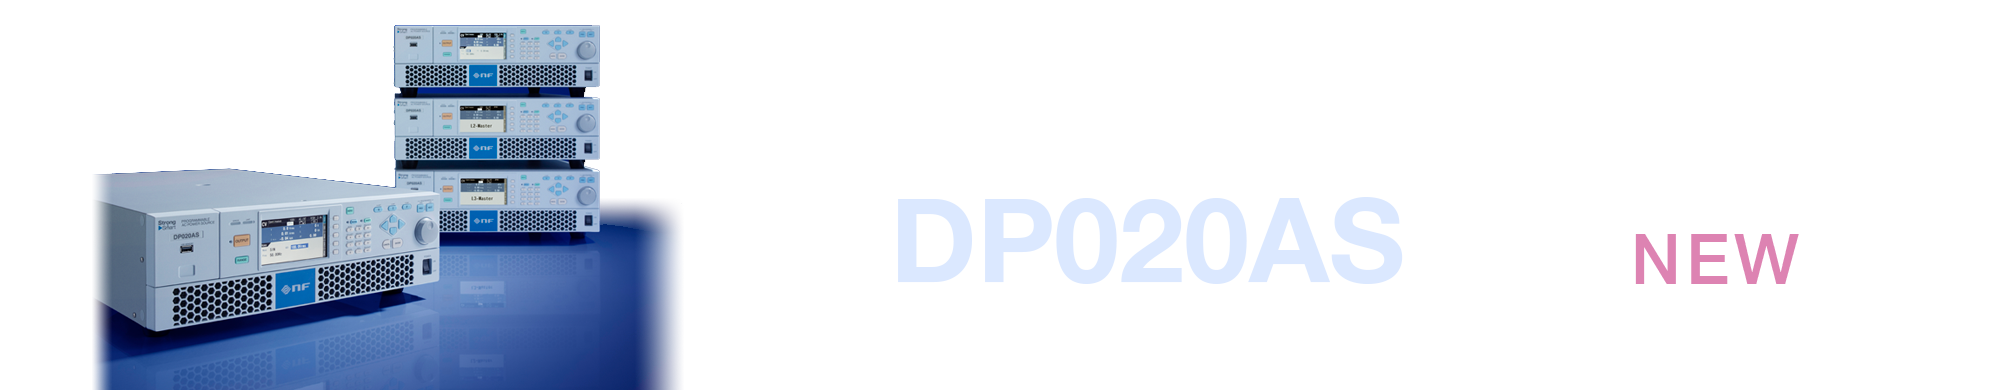 DP020AS